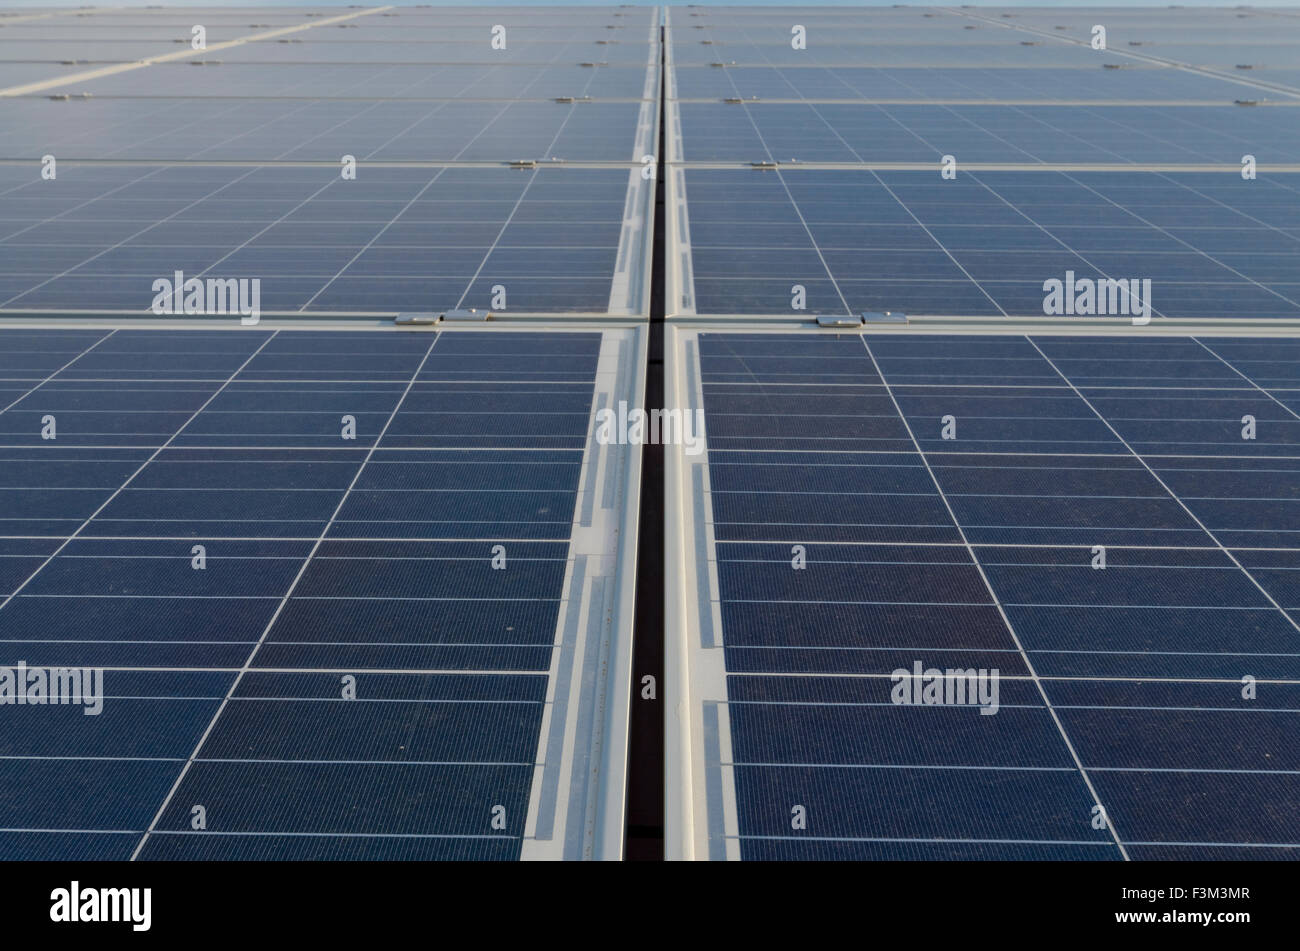 Detail of Photovoltaik solar panels Stock Photo